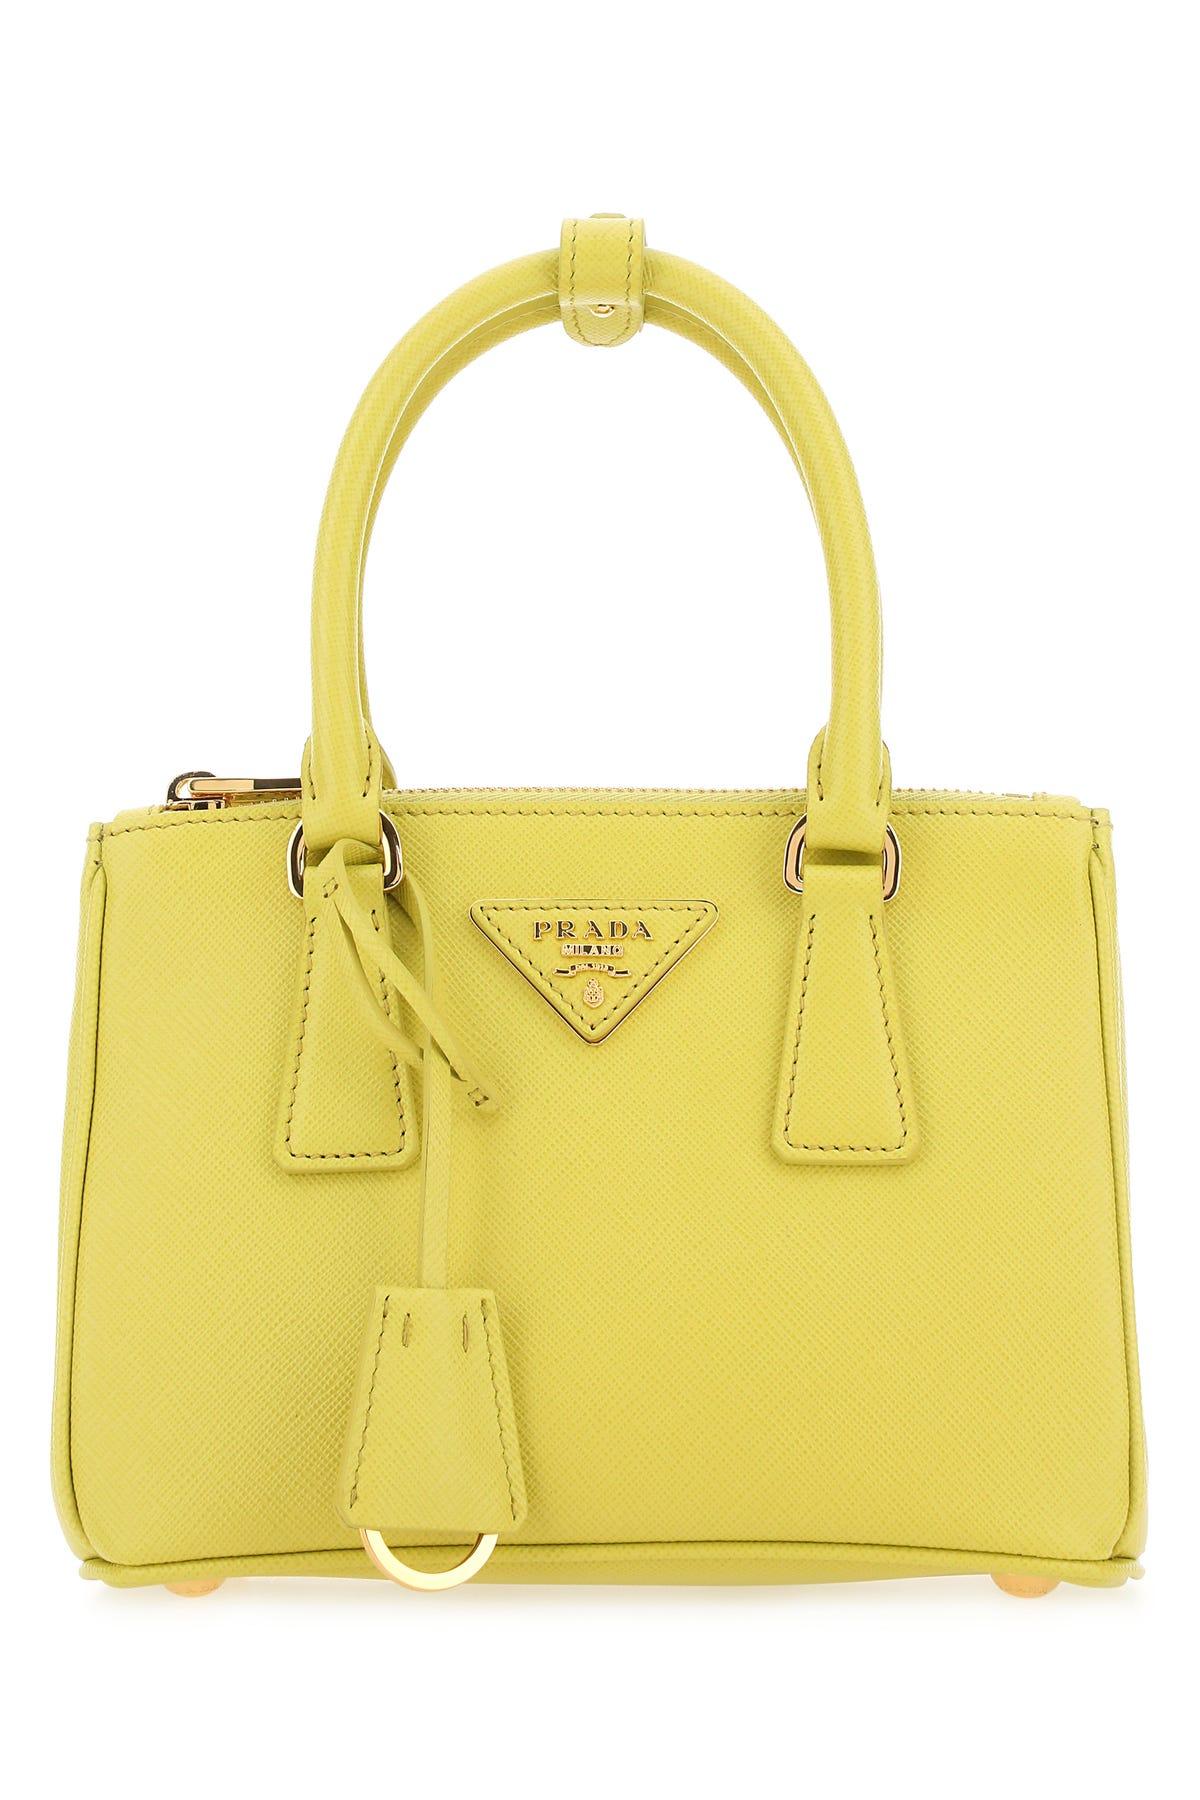 Prada Yellow Leather Handbag